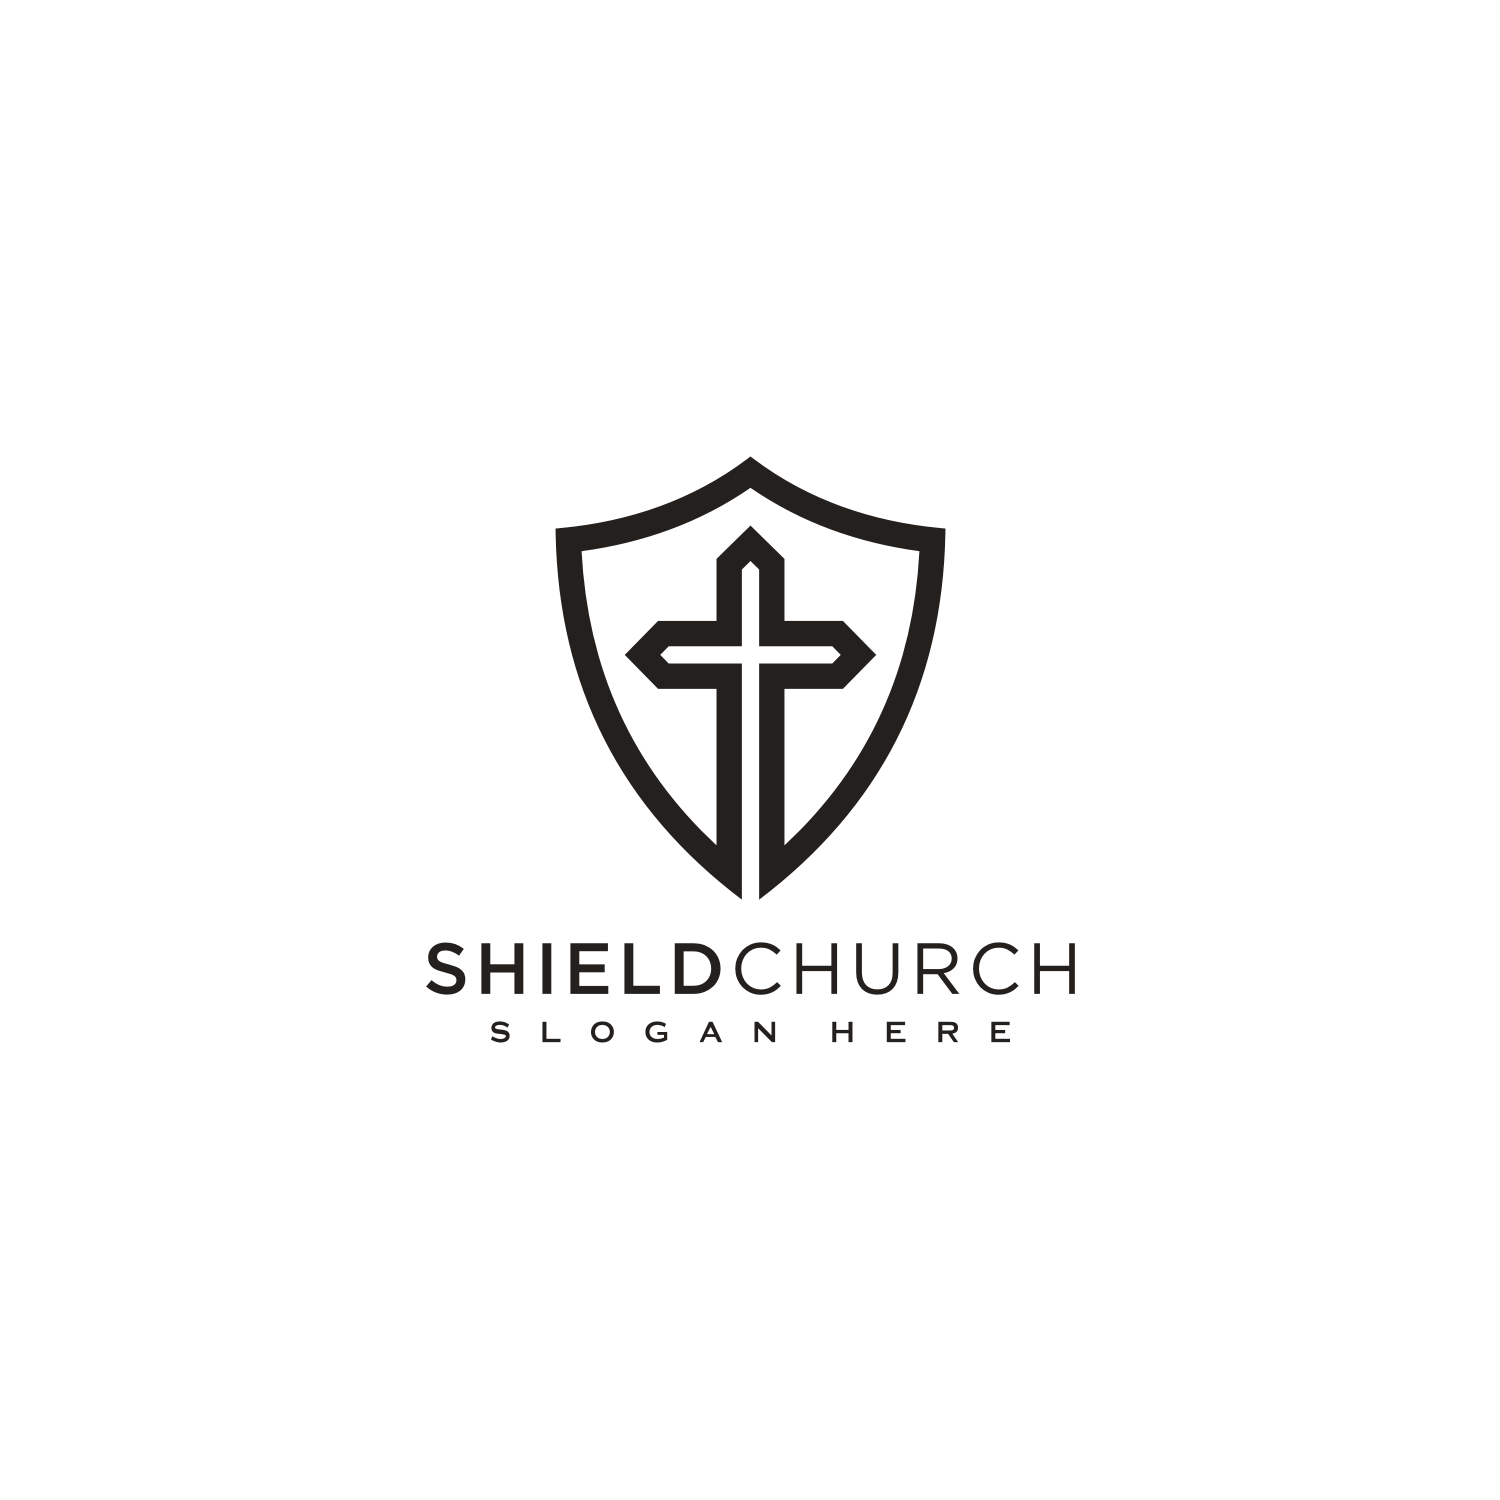 Shield Church Line Style Logo Vector Design cover image.